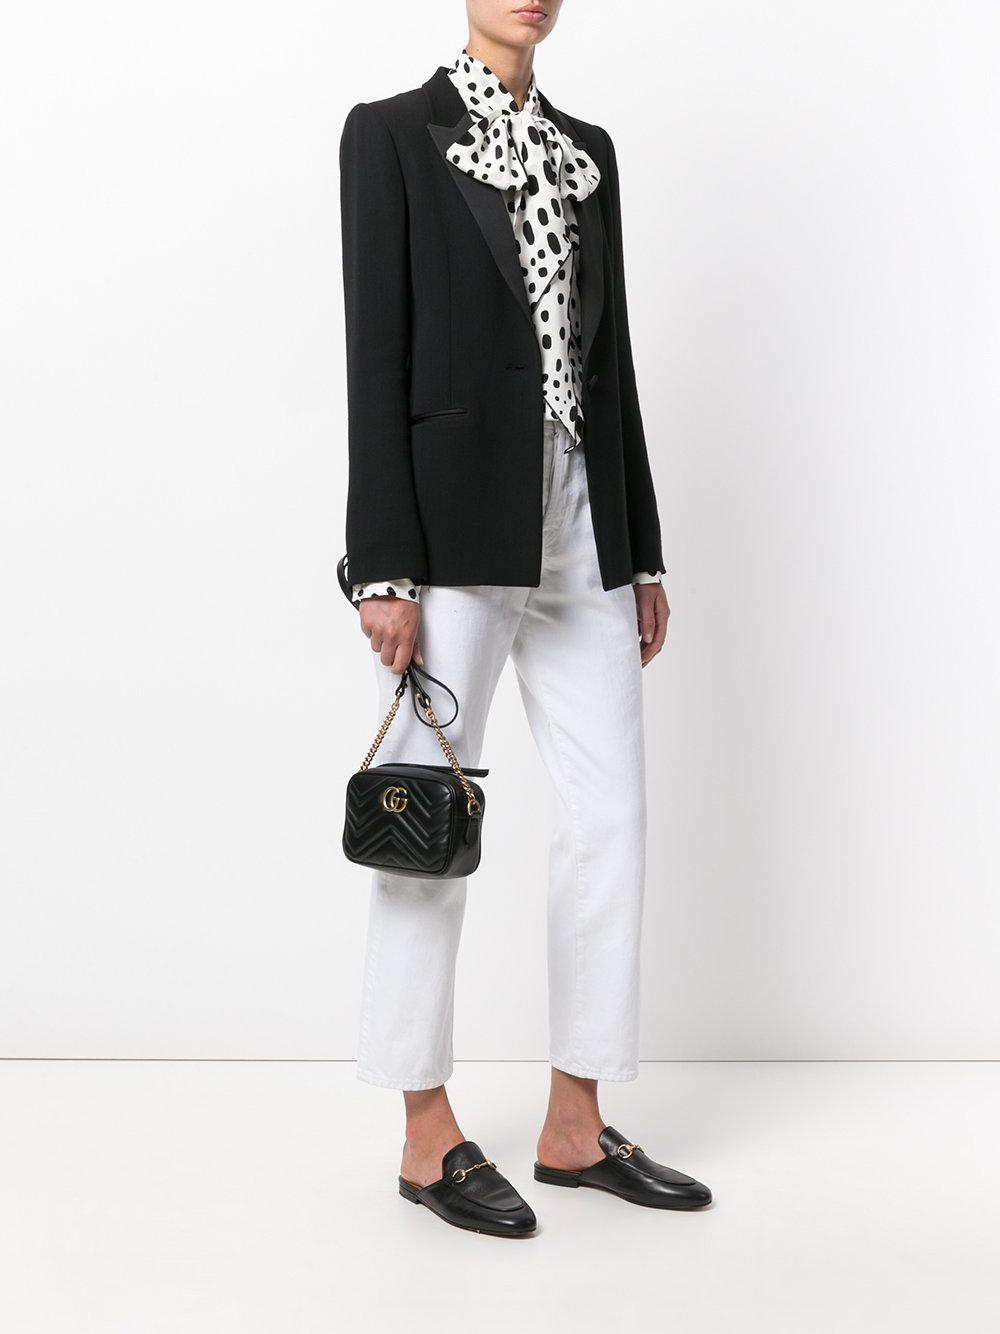 Gucci Leather Gg Marmont Matelasse Mini Bag in Black - Lyst